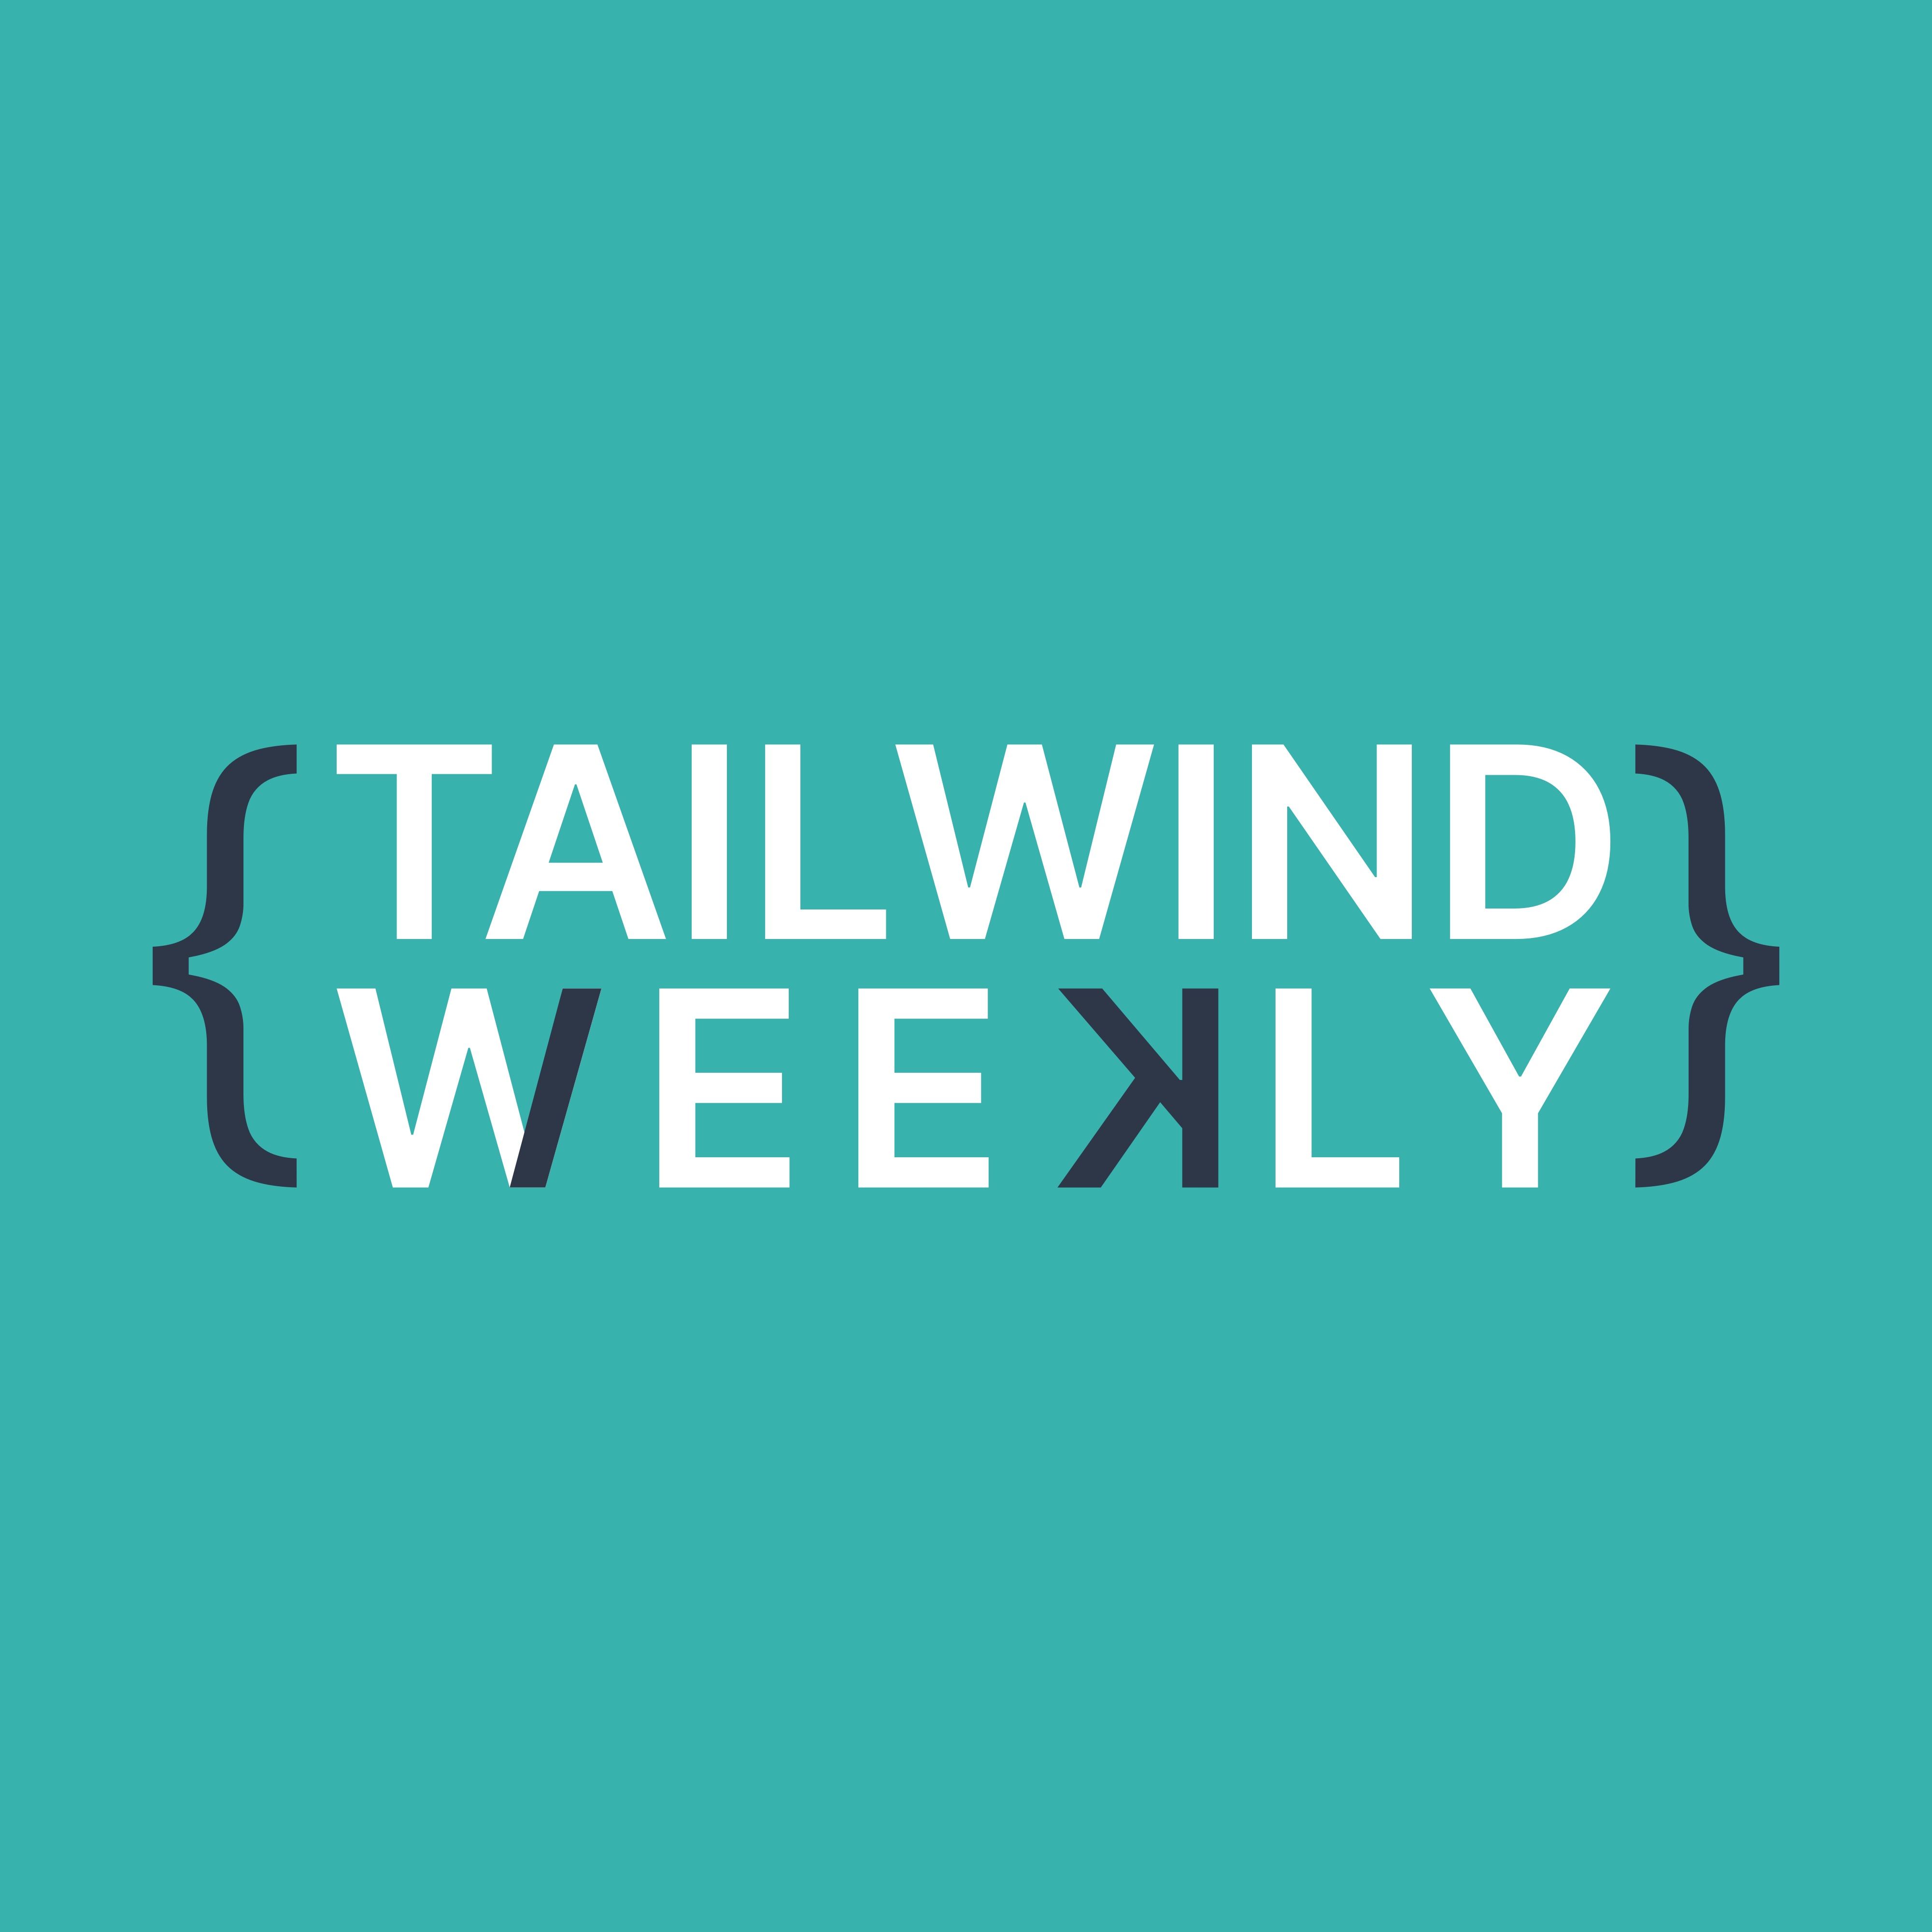 Tailwind Weekly